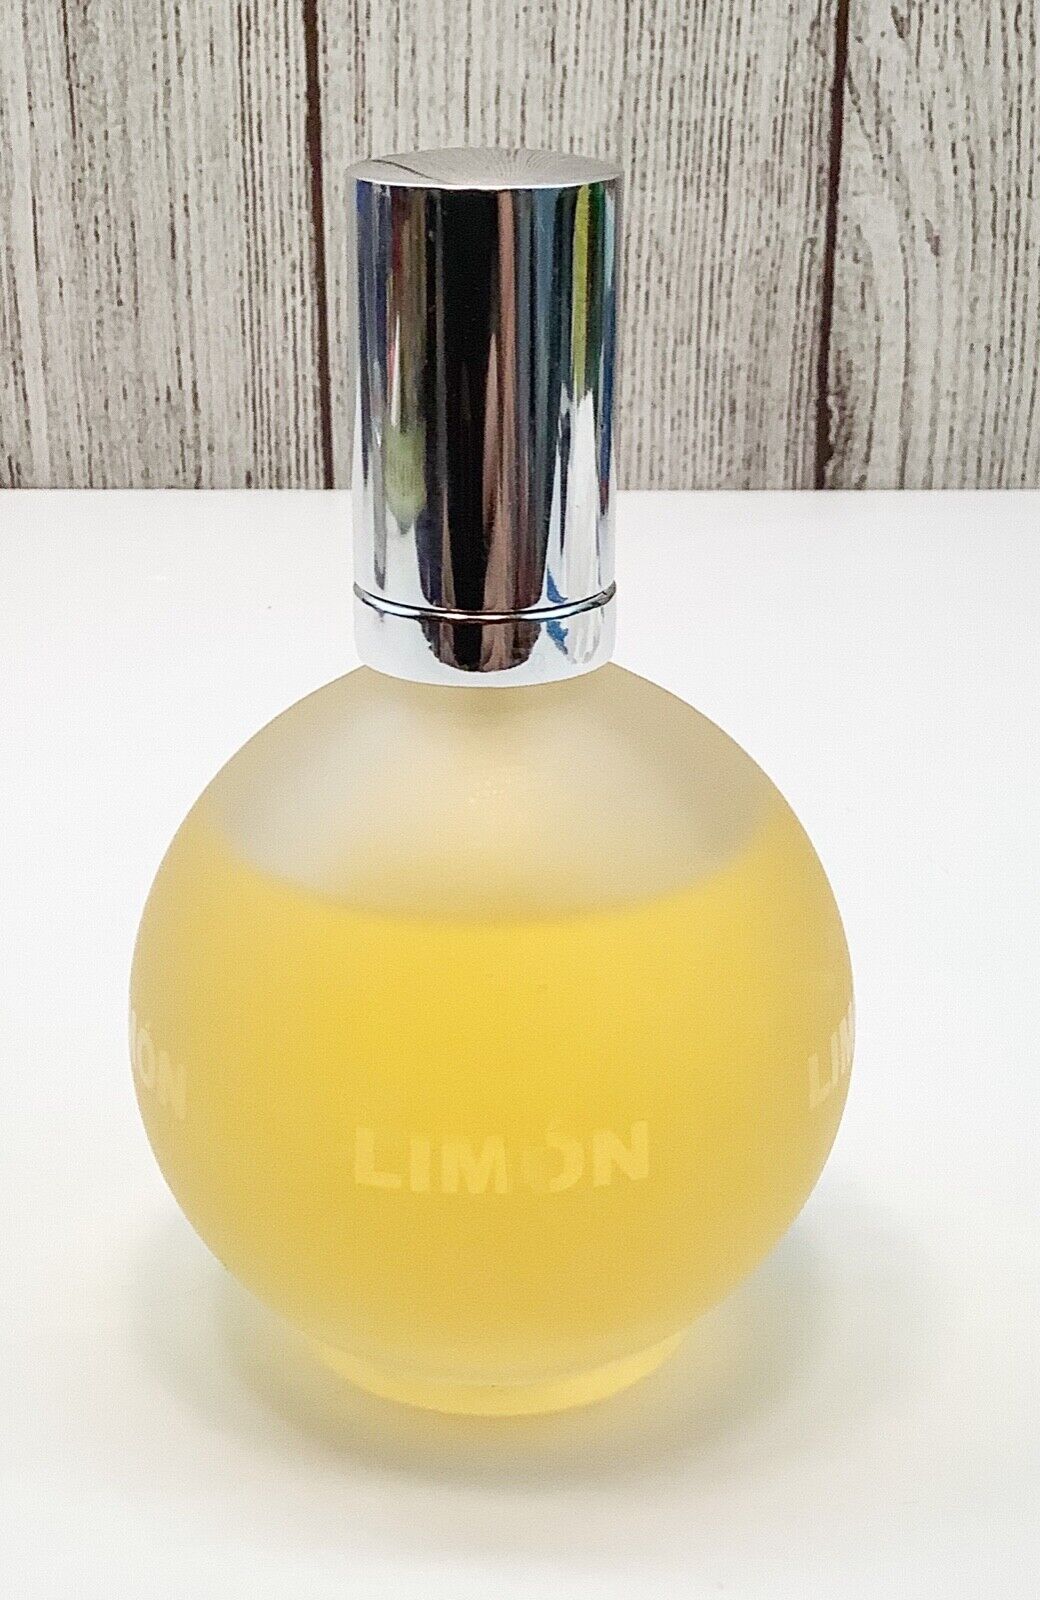 Thymes LIMON Eau de Toilette Spray Perfume Rare Discontinued Vintage 4.25fl oz